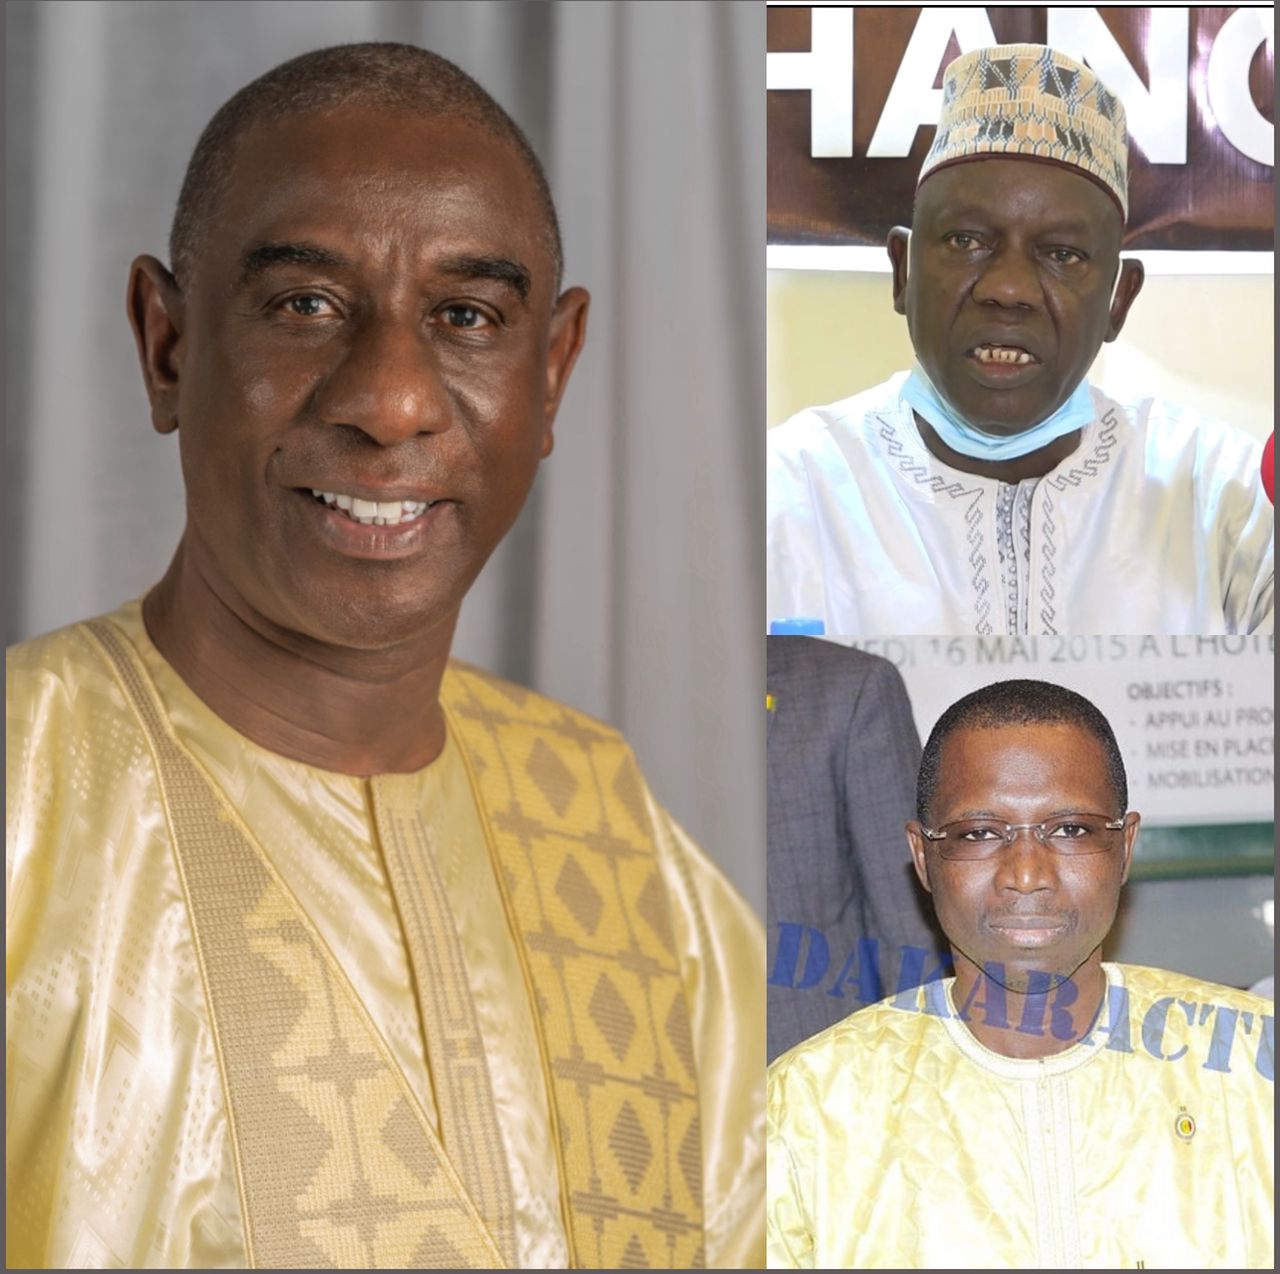 Sinthiou Bambabé Banadji / Kanel : Le ministre Mamadou Talla bat Daouda Dia et l’ancien DG de la Douane, Oumar Diallo